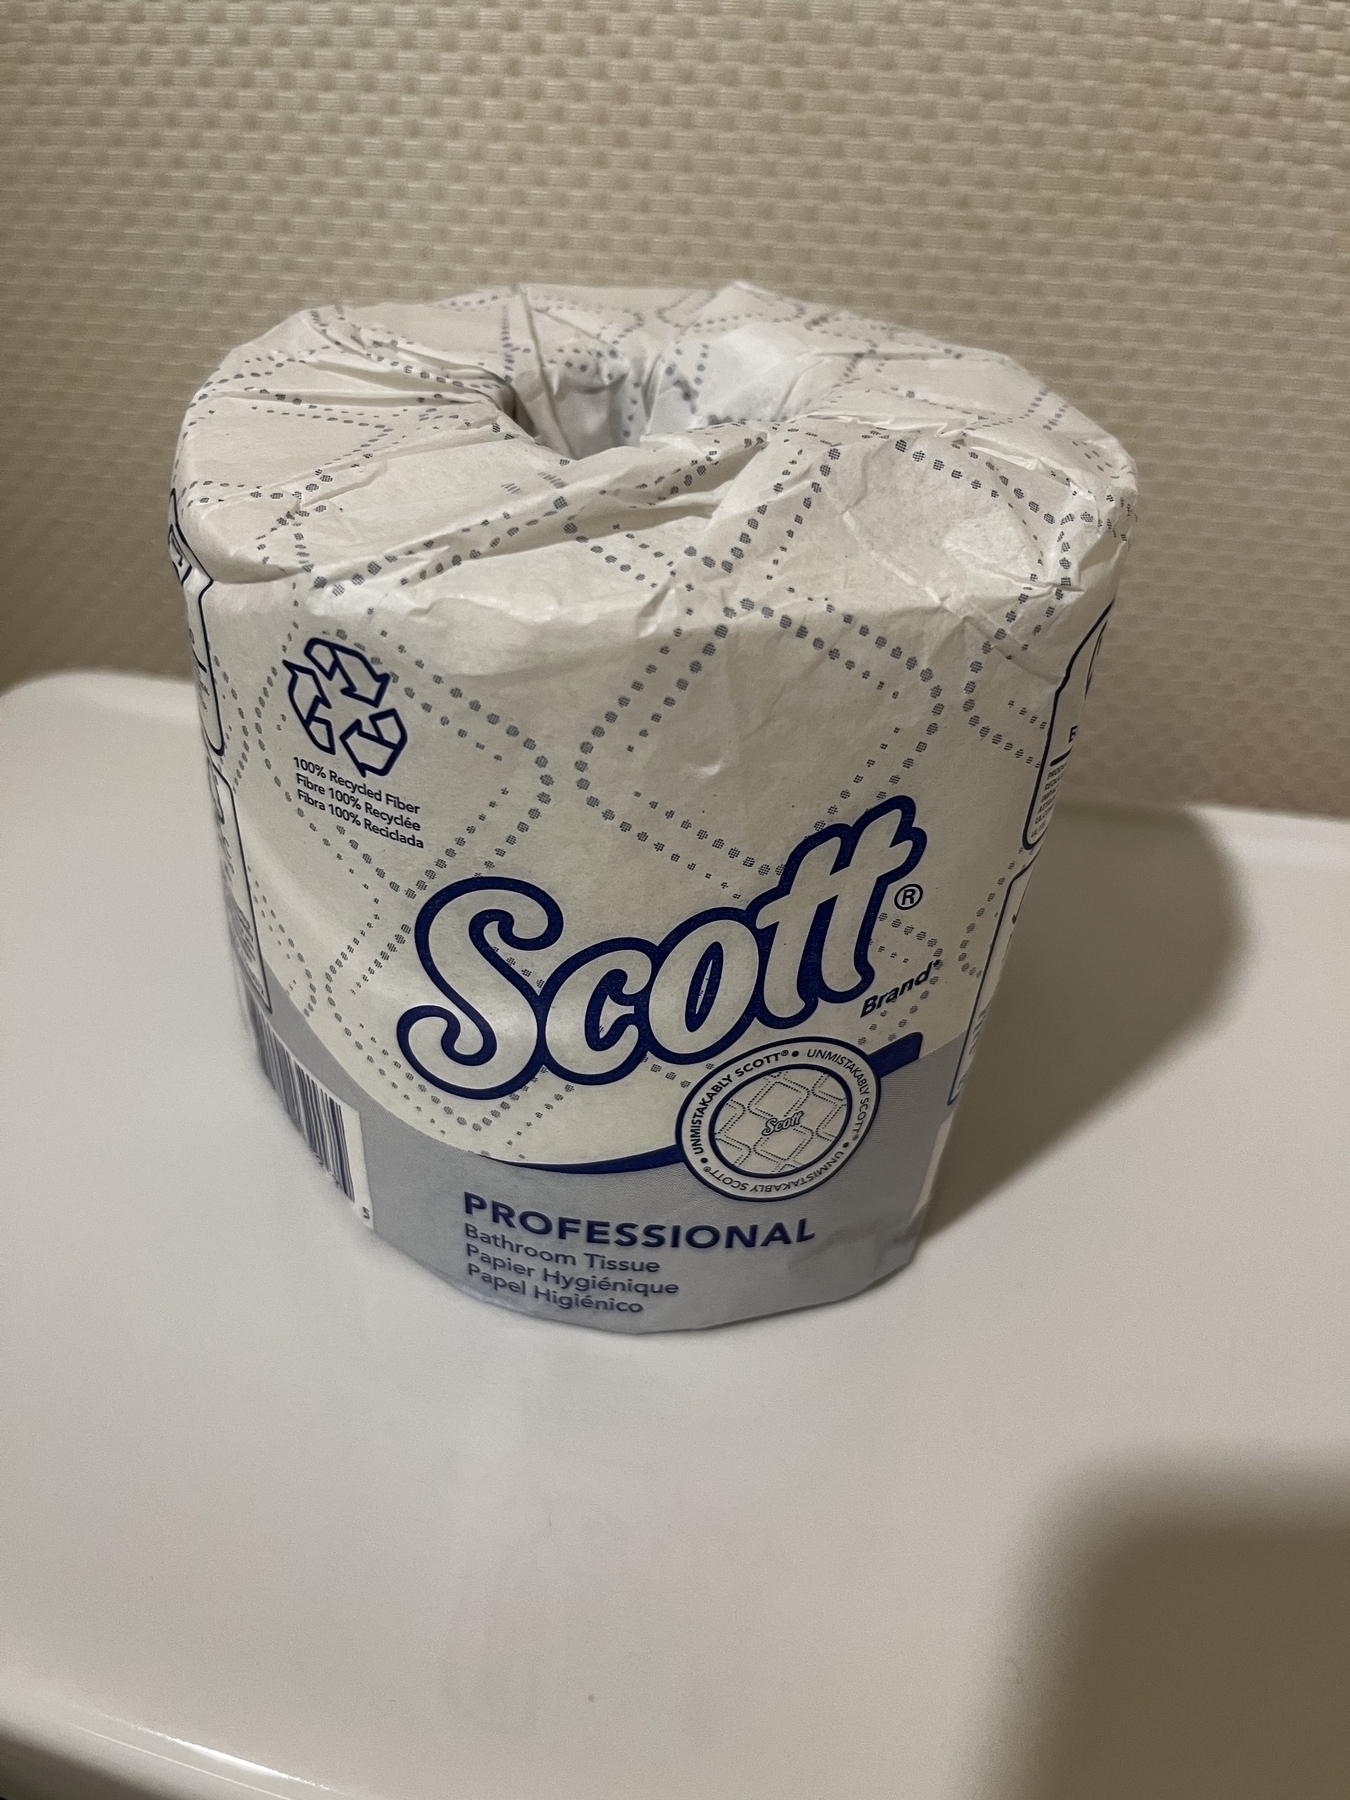 Scott professional toilet paper. 